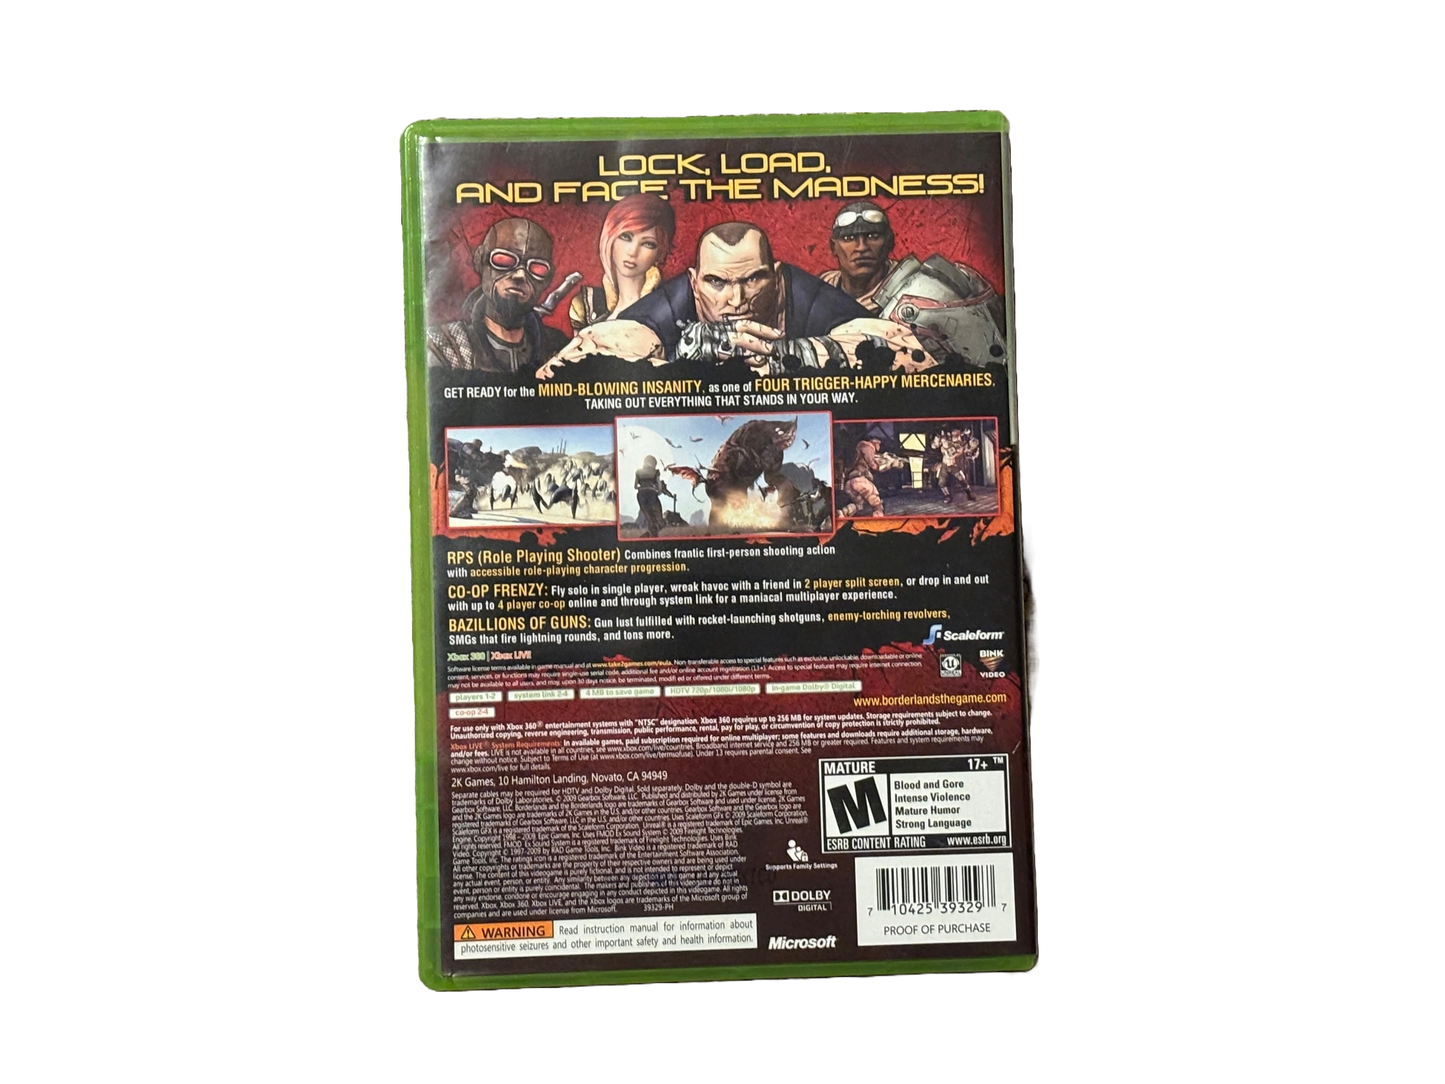 Borderlands Platinum Hits Microsoft Xbox 360 Video Game. Complete.